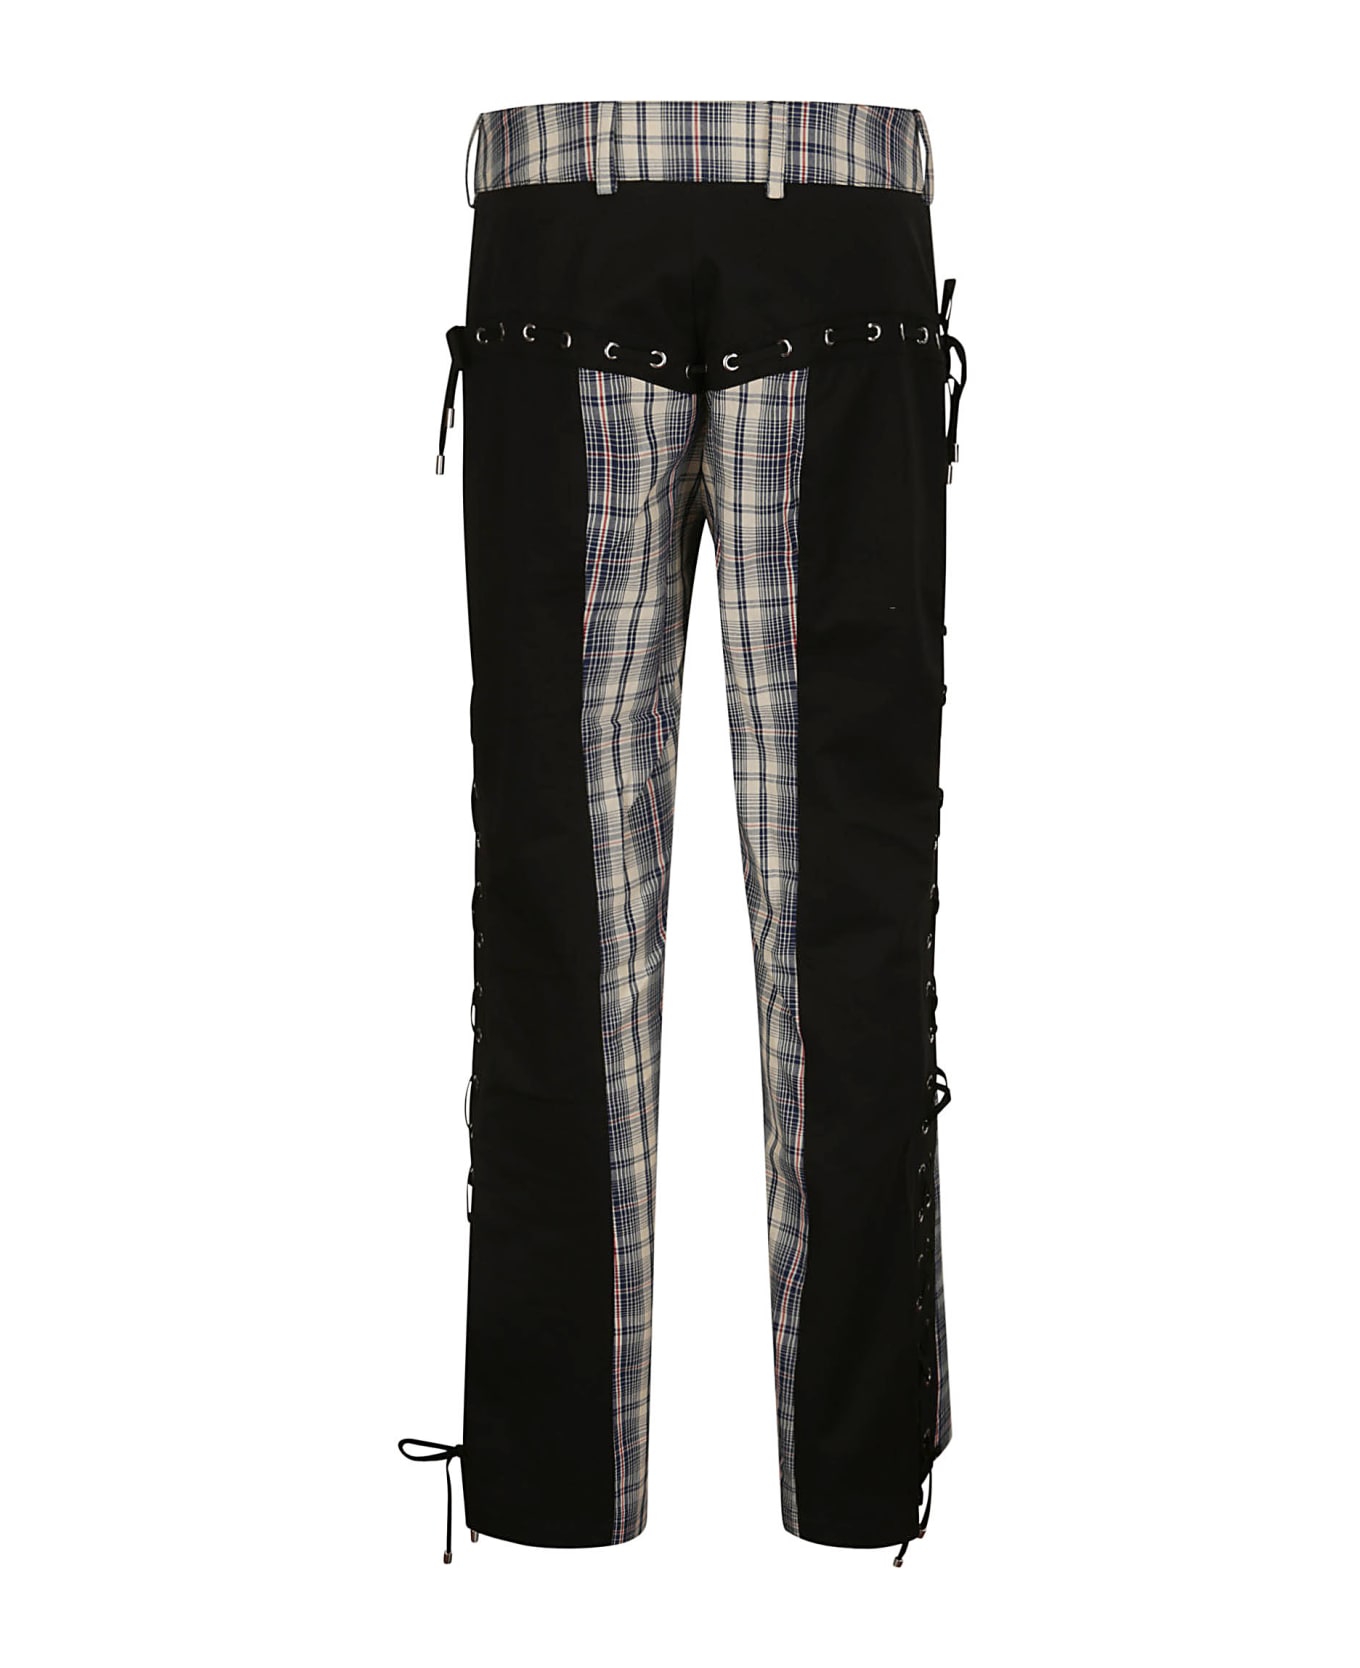 Chopova Lowena Collage Tartan Trousers - BLACK AND TARTAN ボトムス